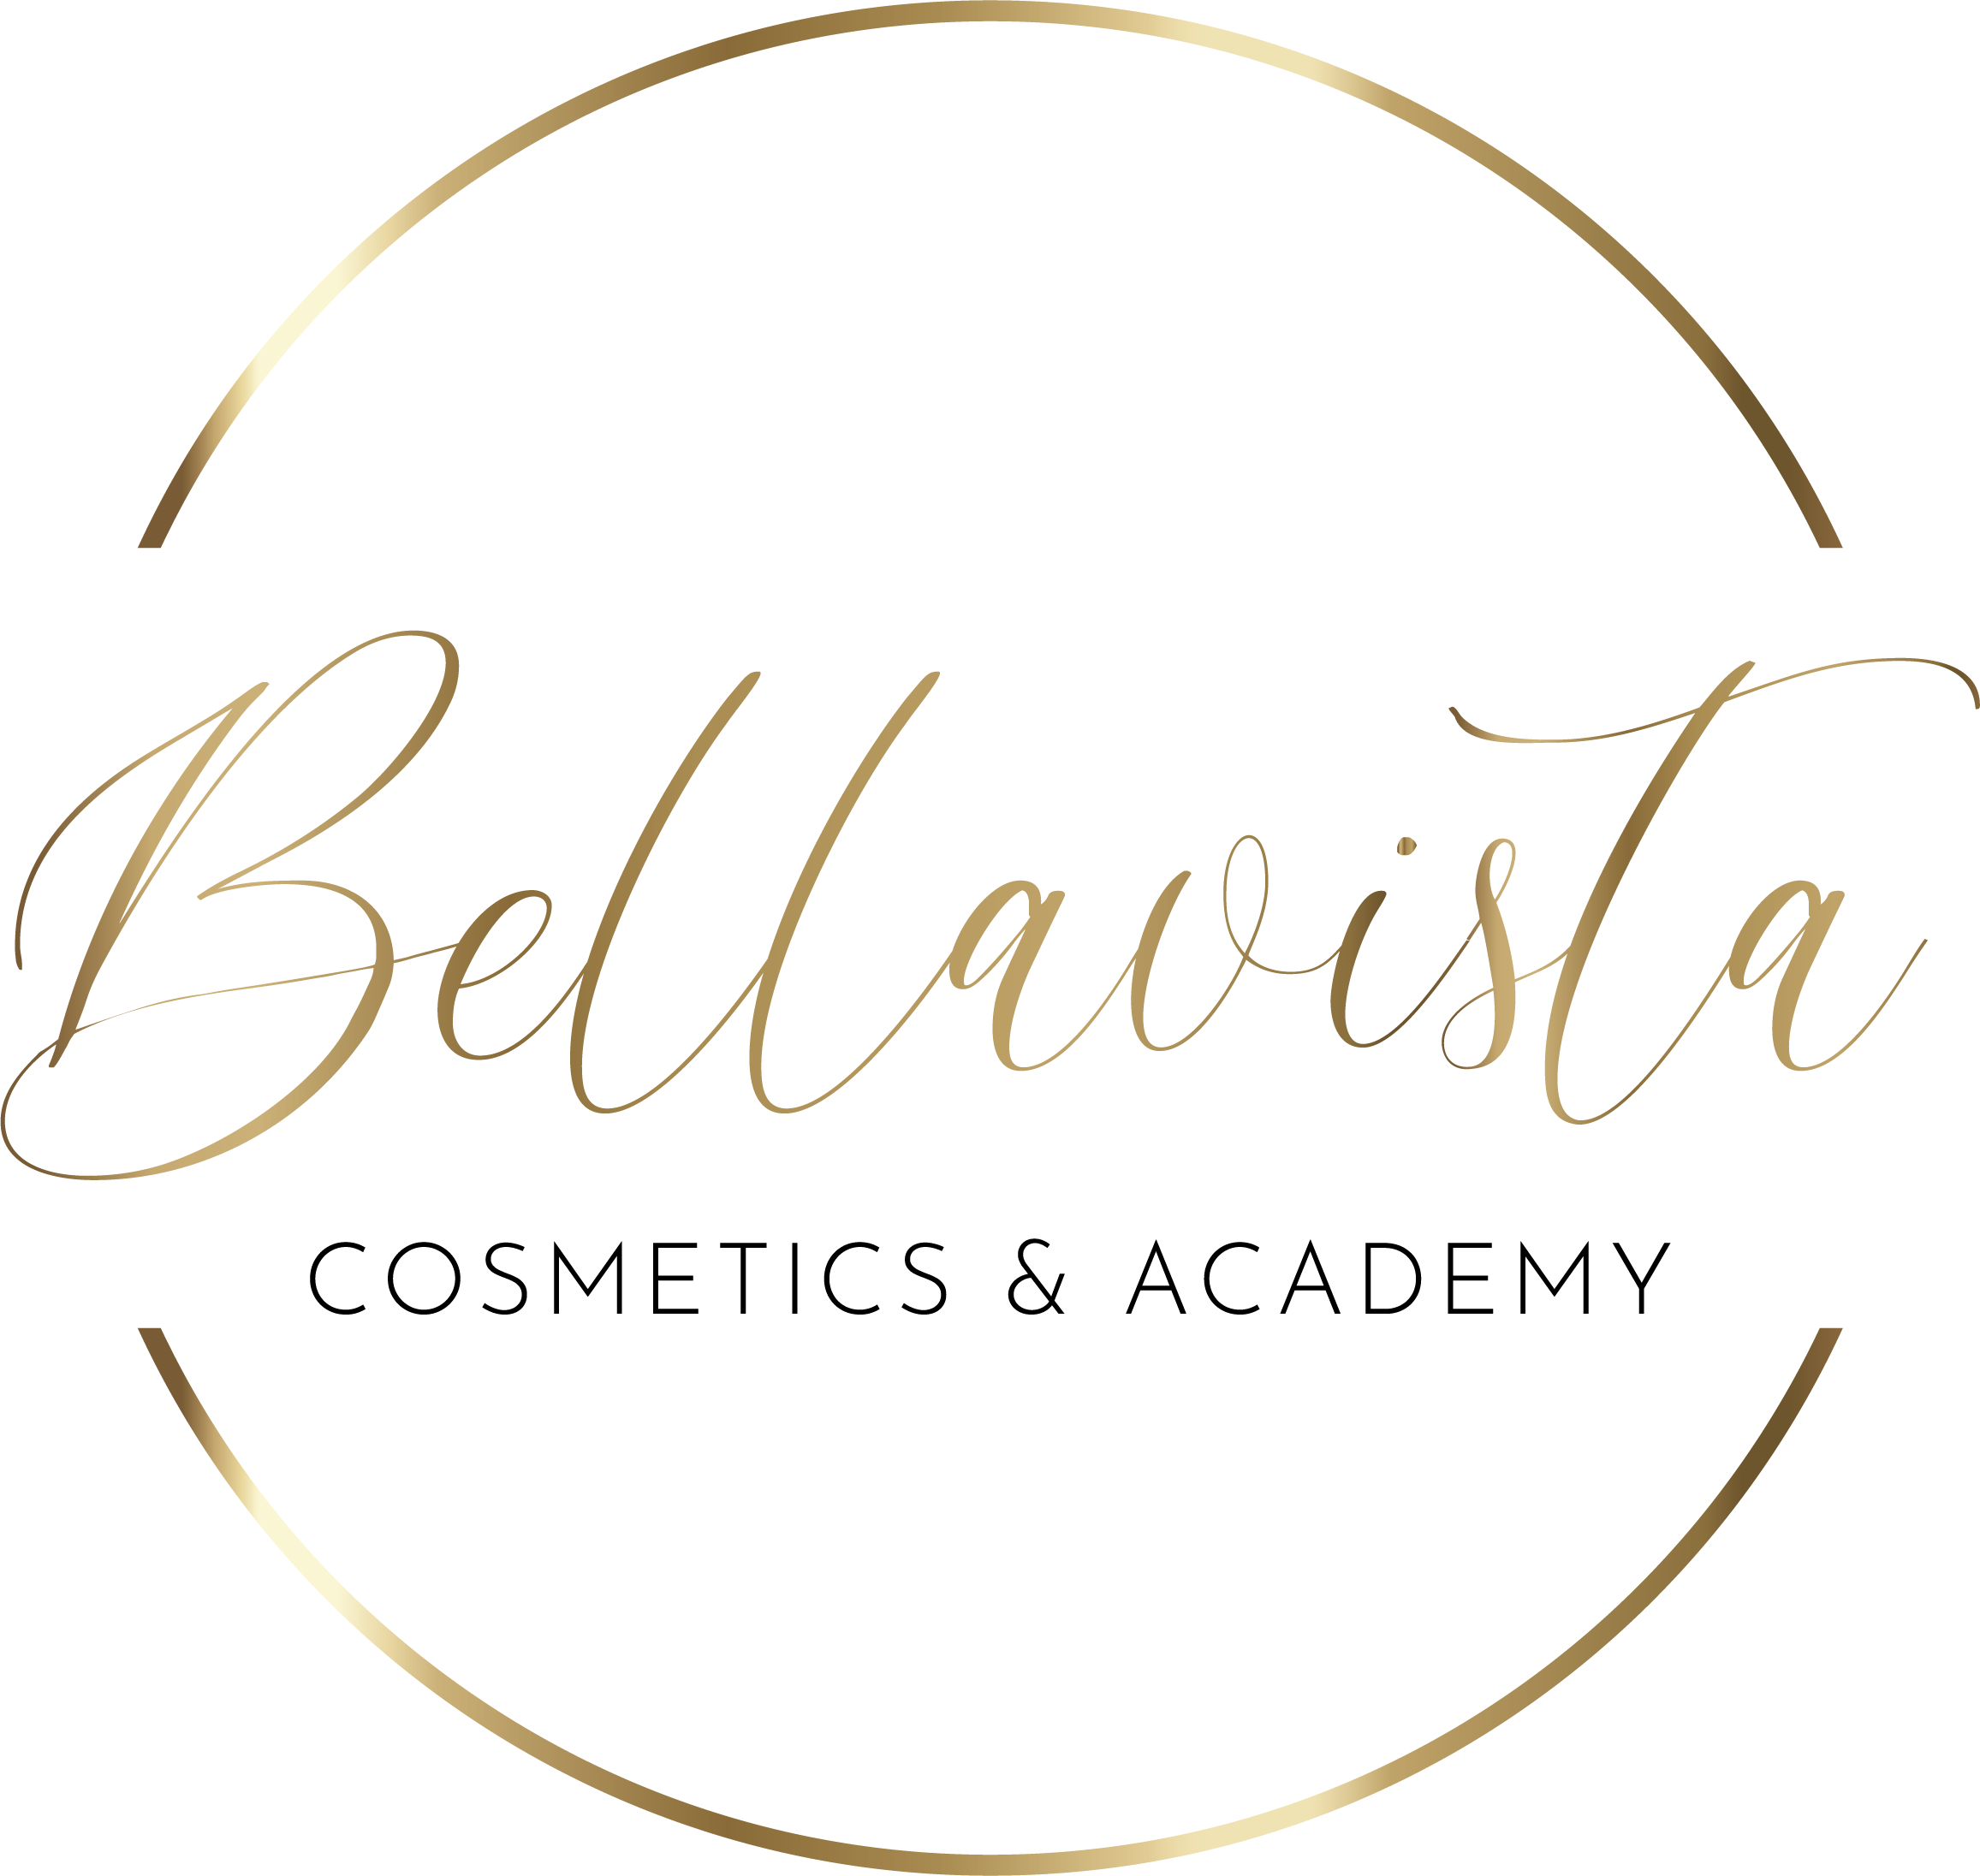 Bellavista Cosmetics & Academy